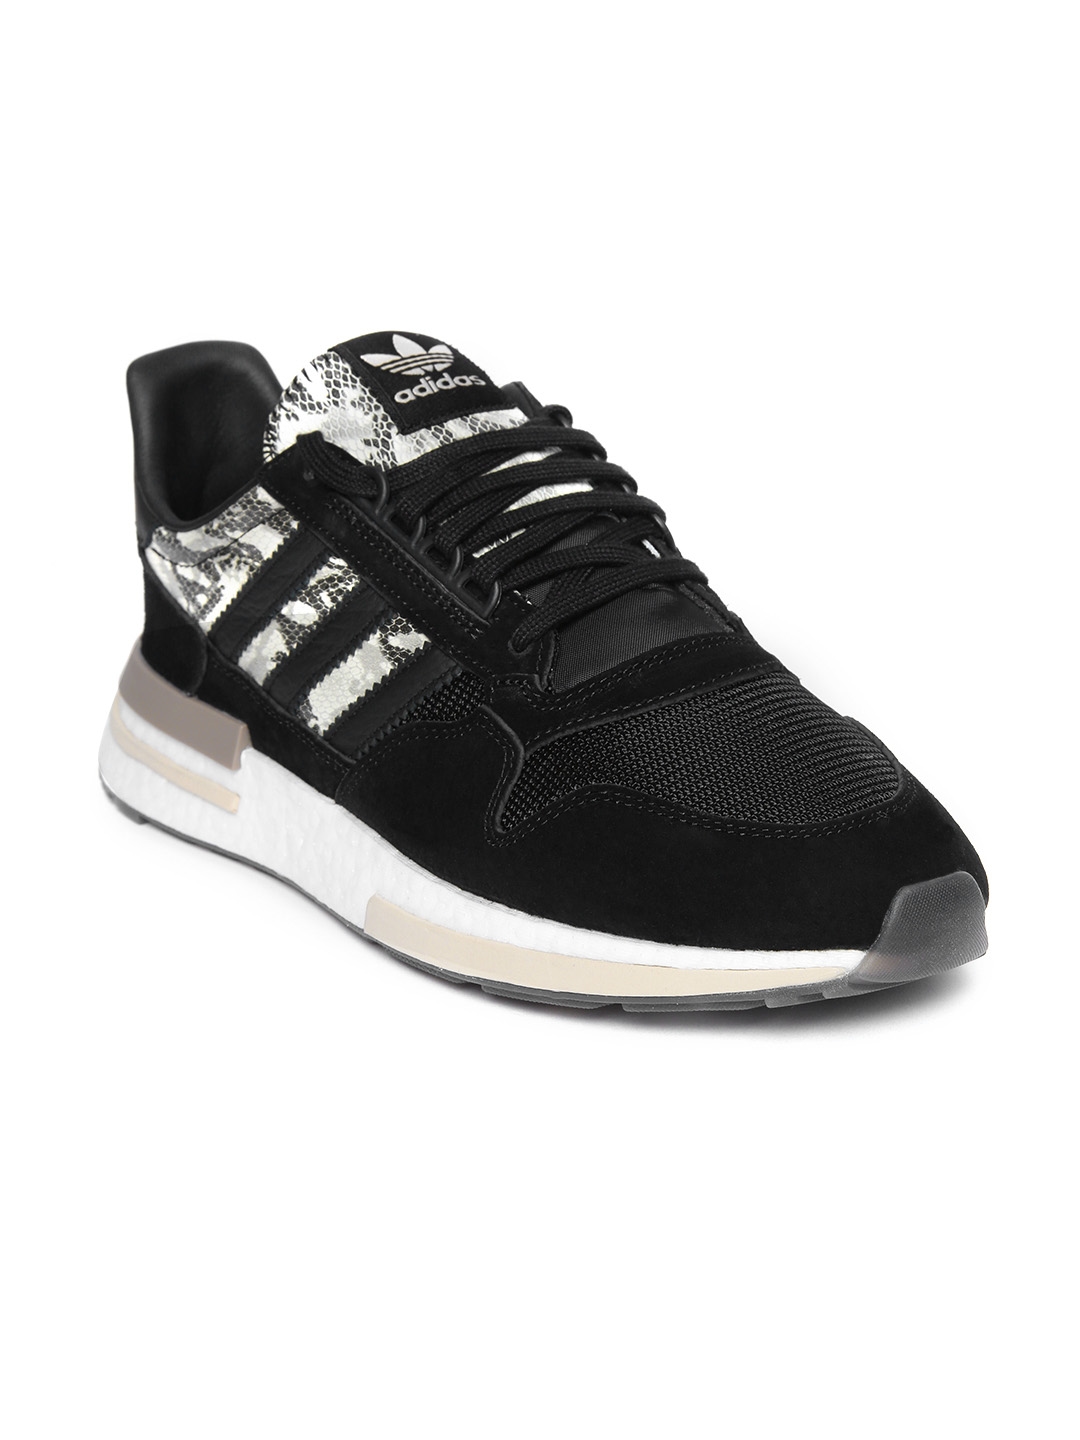 Buy ADIDAS Originals Men Black ZX 500 RM Snakeskin Print Sneakers - Shoes for Men 8616573 | Myntra